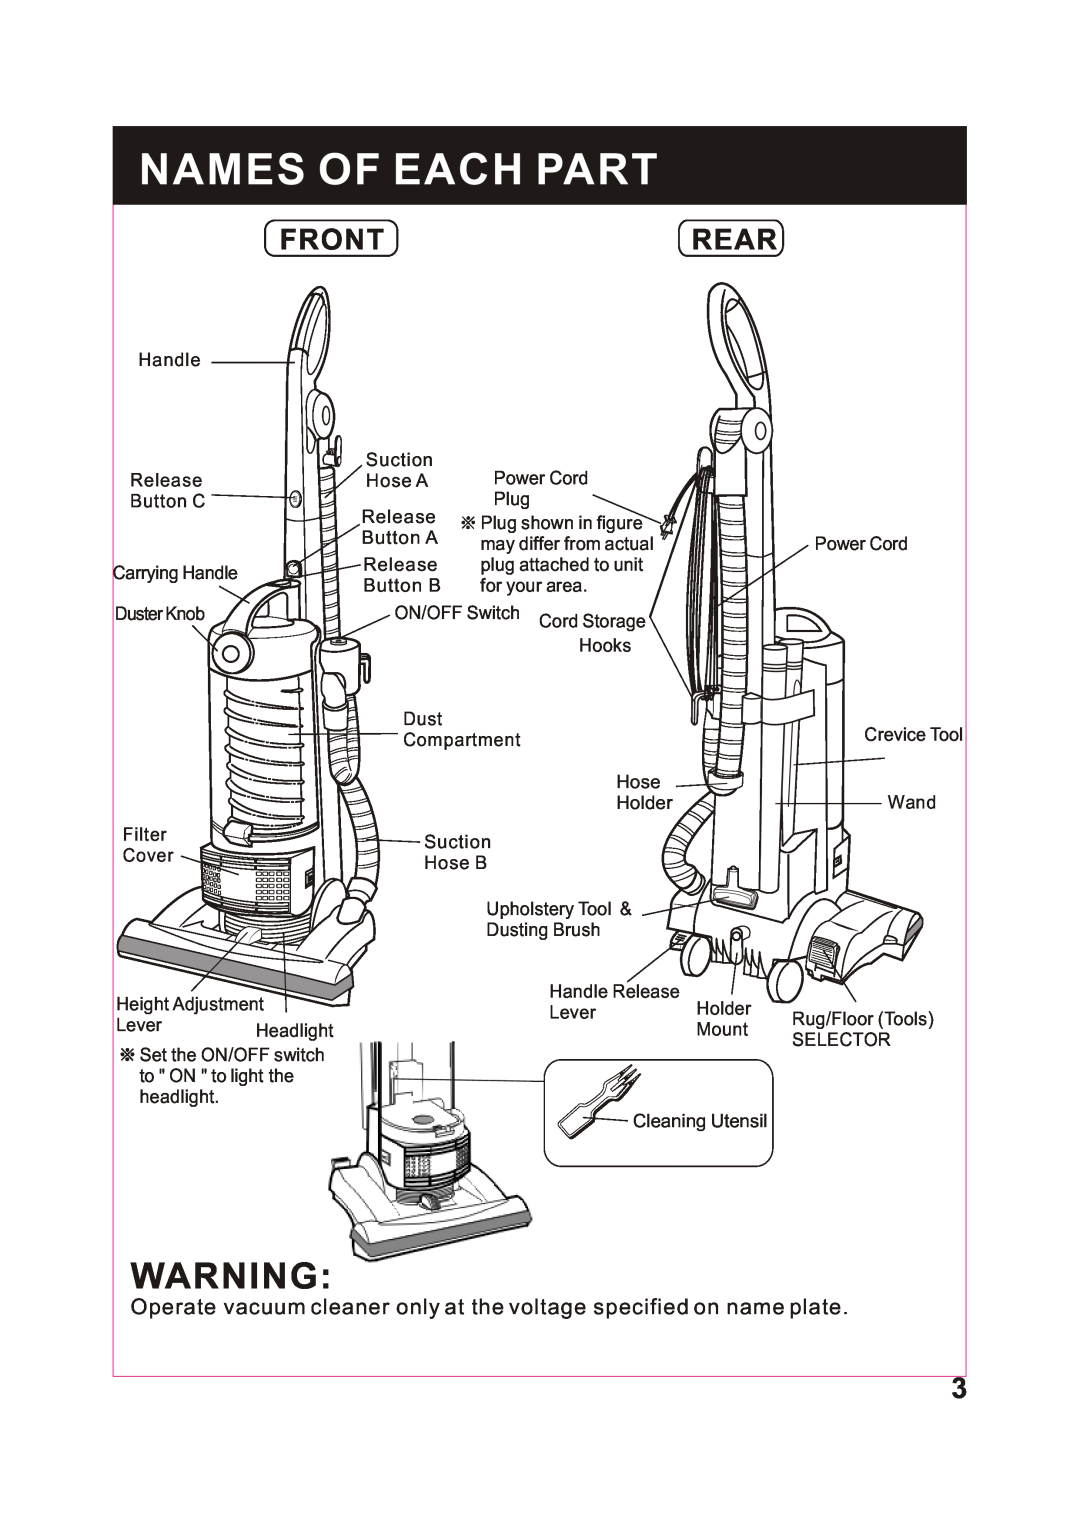 Fantom Vacuum FM743H instruction manual Names Of Each Part, Frontrear 